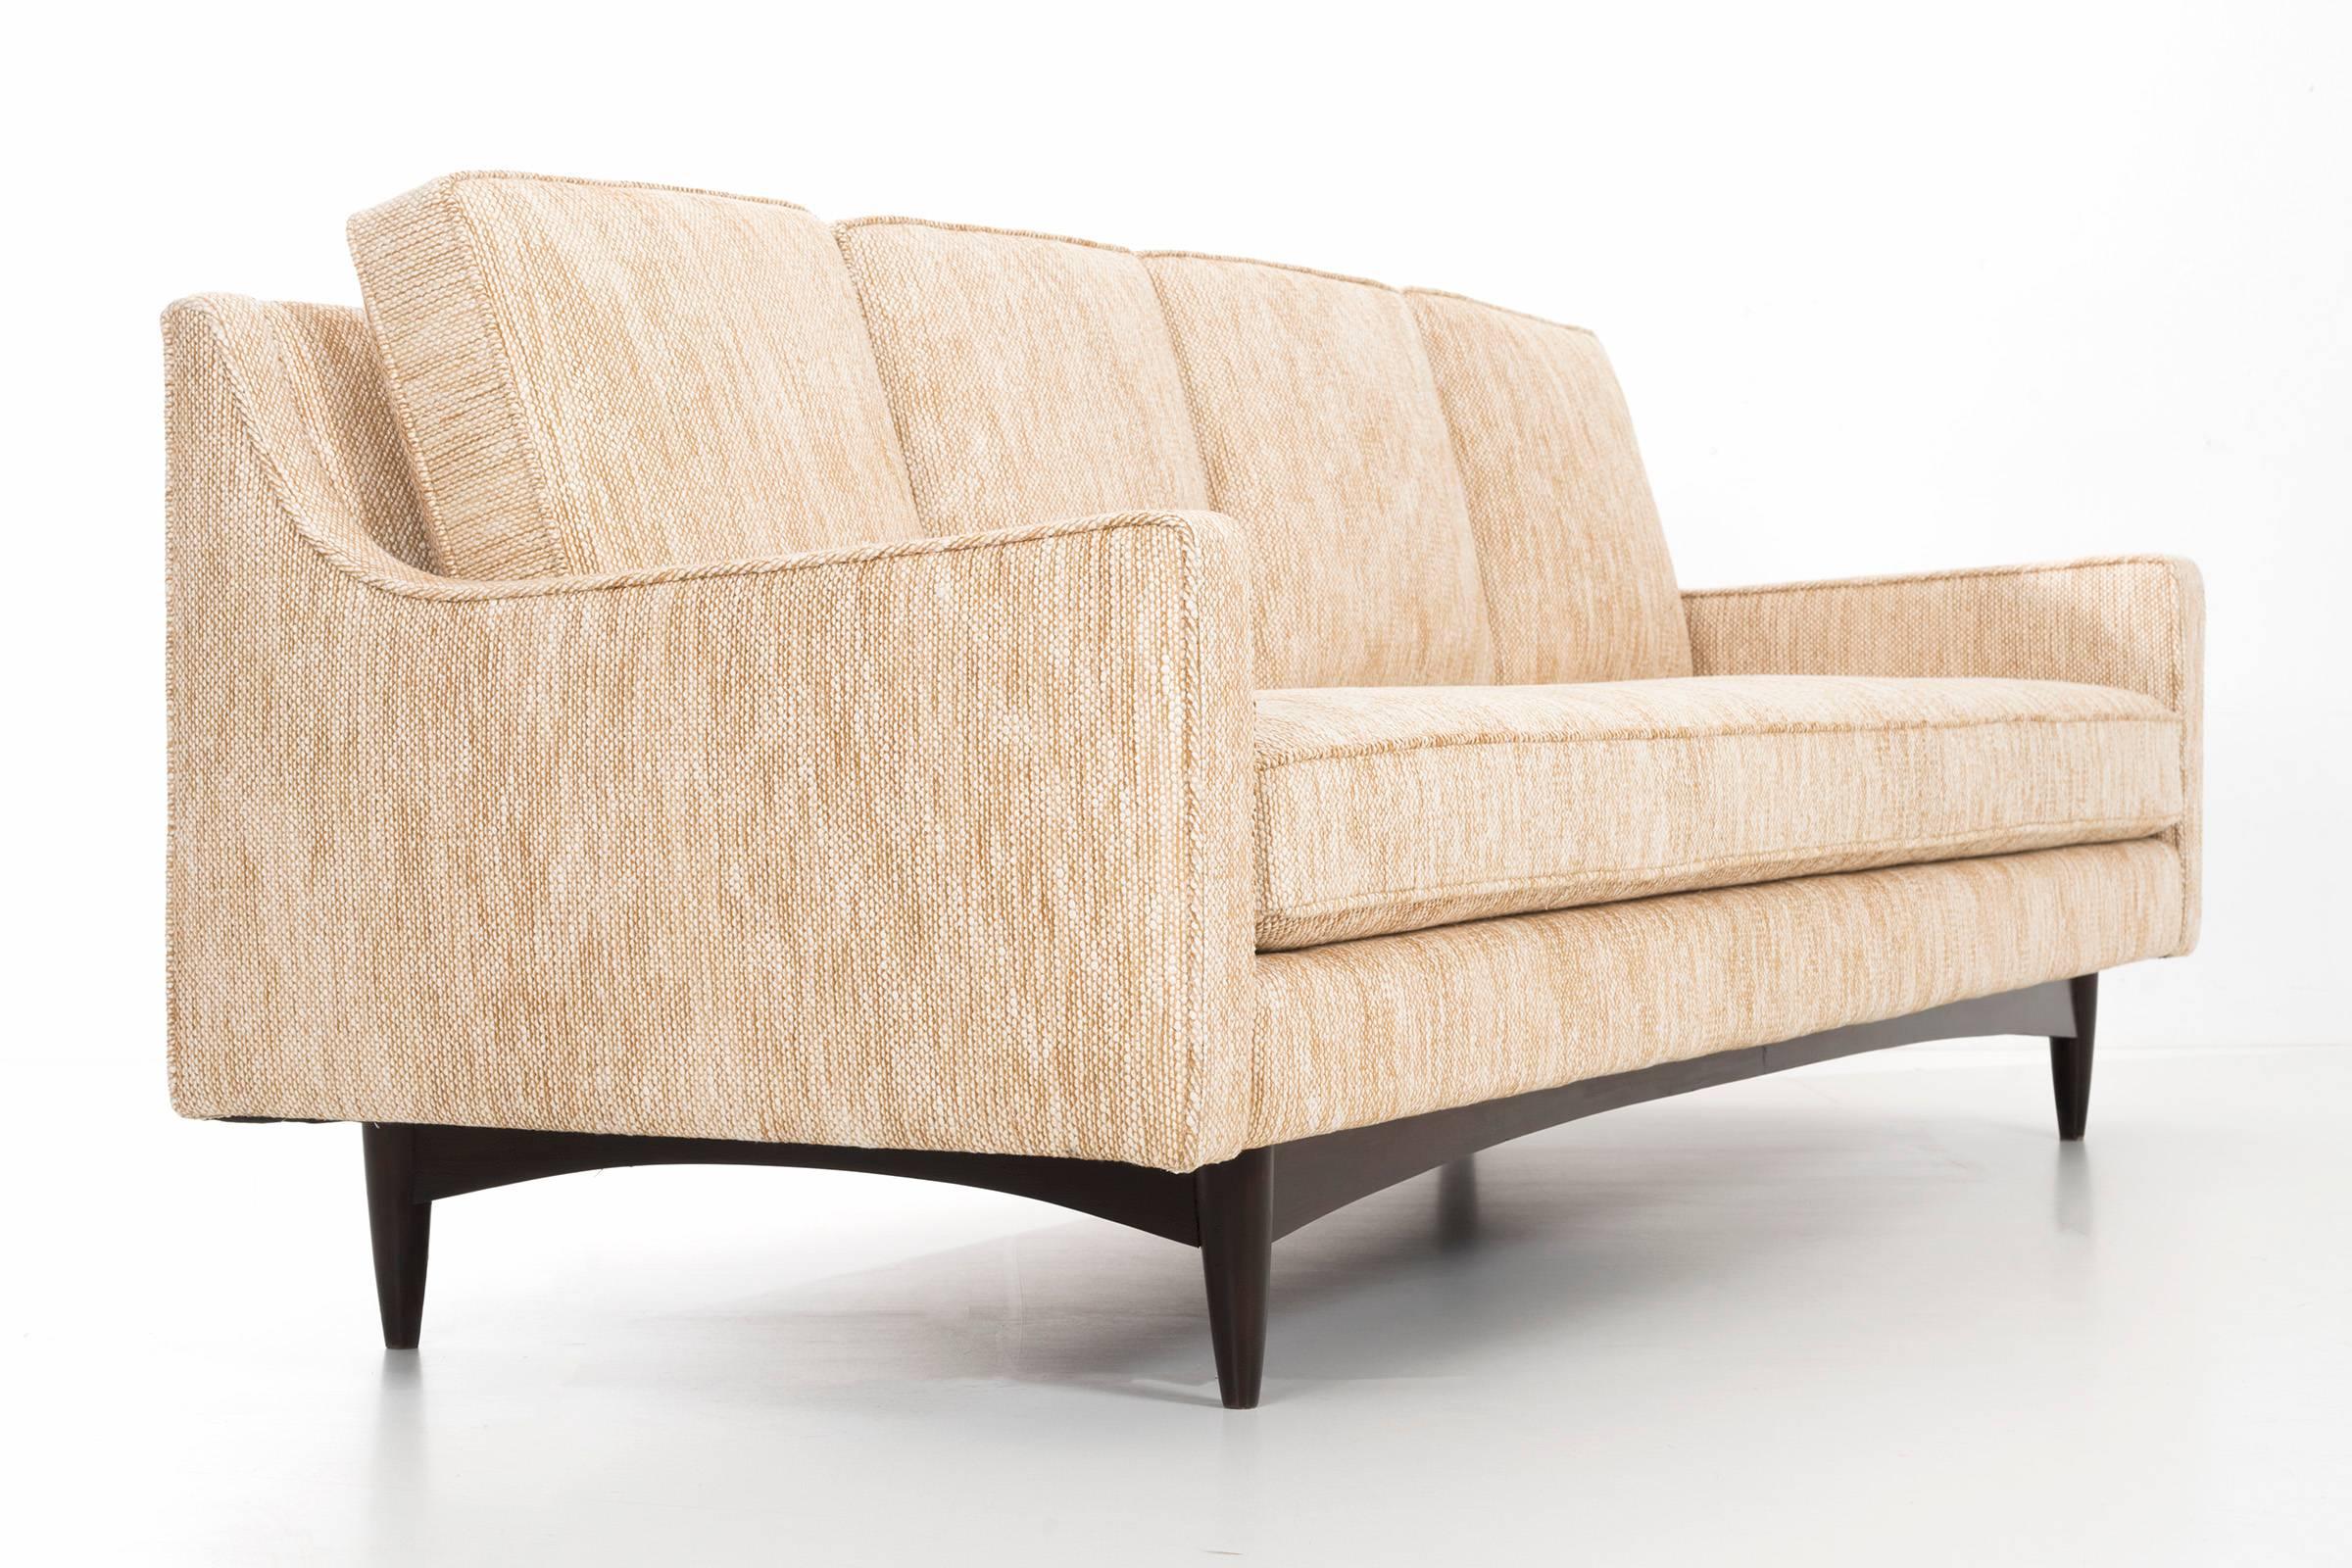 Italian Woven Sofa in the Style of Borsani